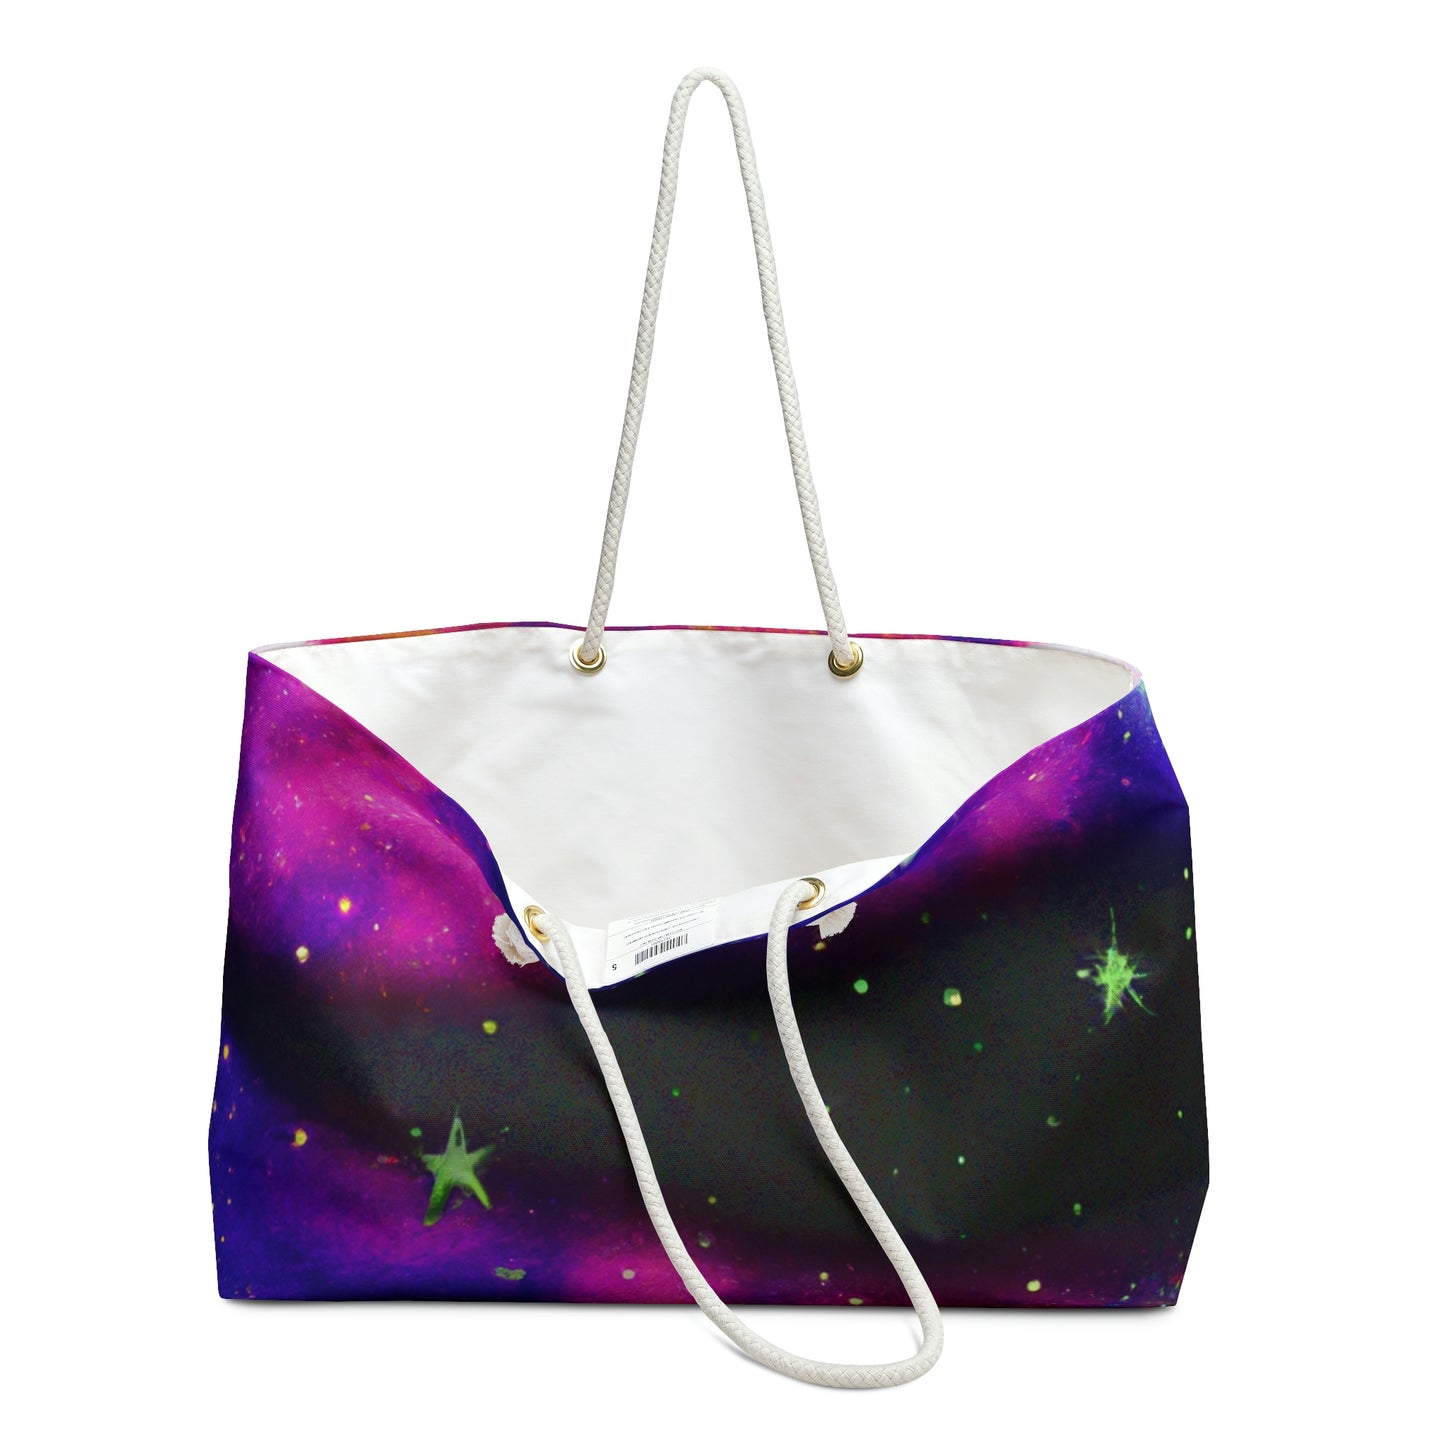 "Starry Night Symphony" - The Alien Weekender Bag